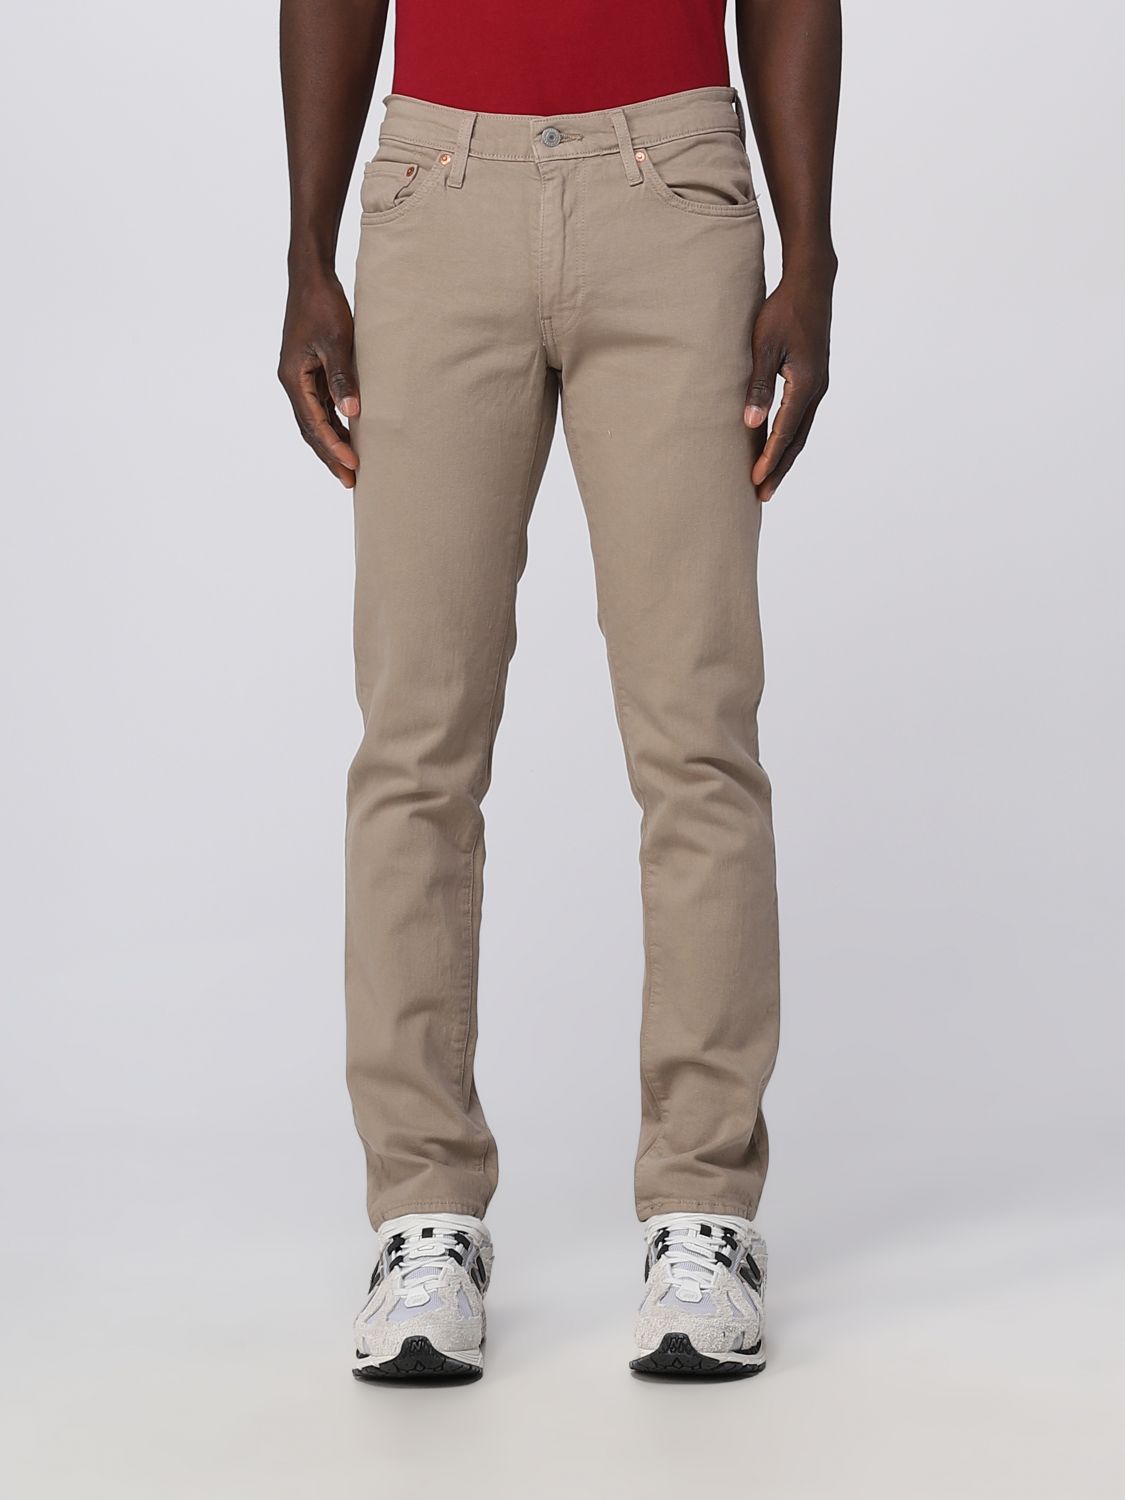 LEVI'S: pants for man - Natural | Levi's pants 45115557 online on ...